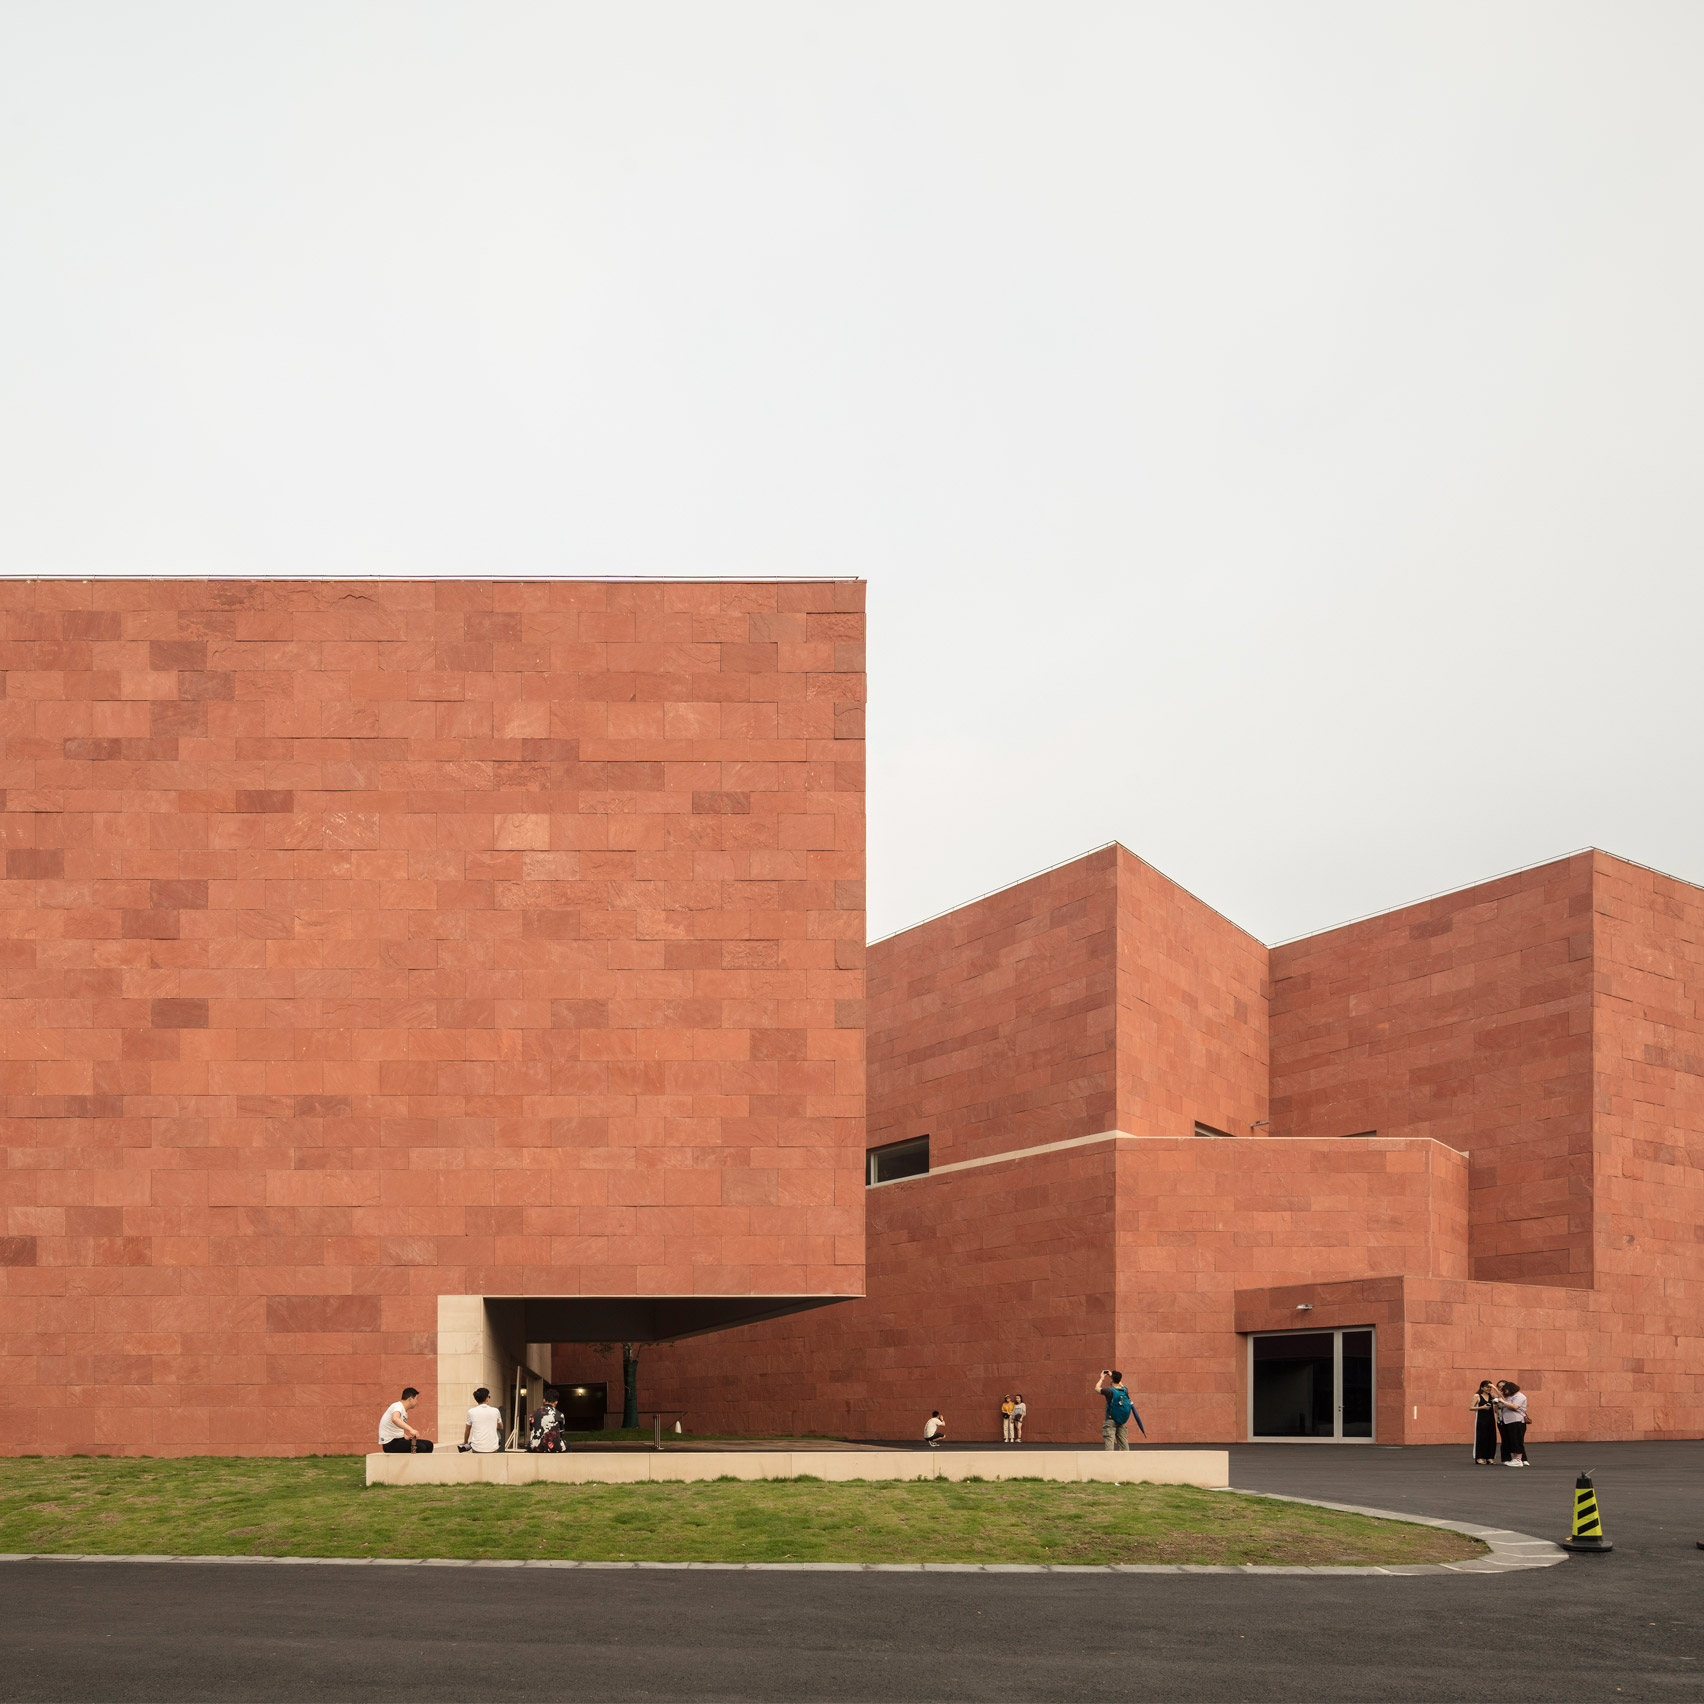 International Design Museum, Zhejiang province, by Álvaro Siza and Carlos Castanheira